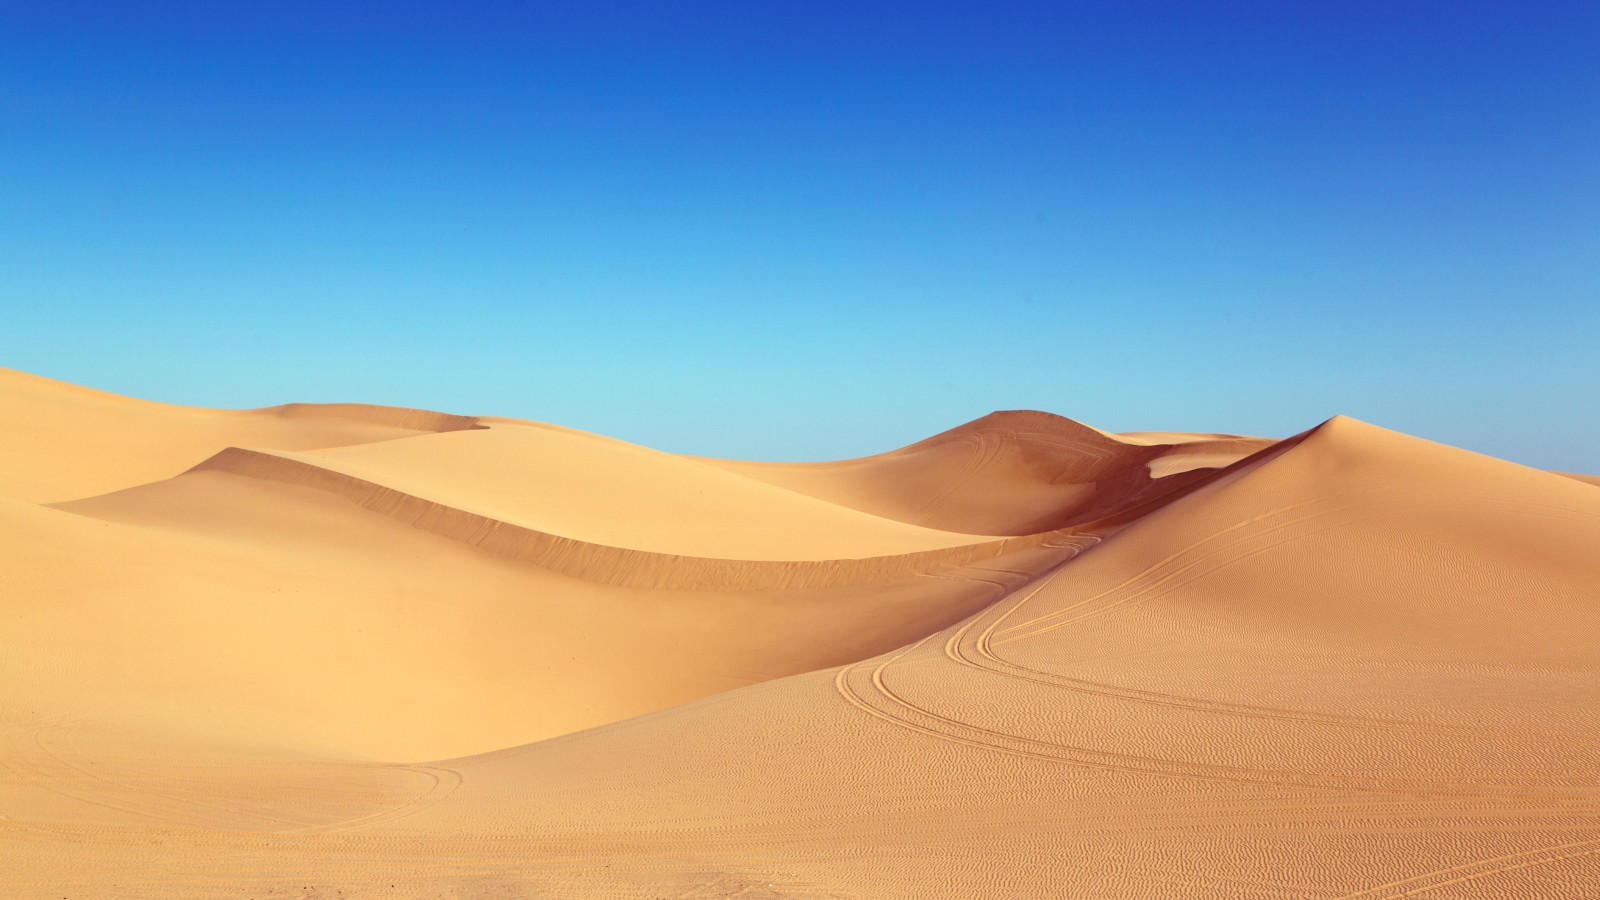 Blue sky and desert dunes wallpaper 1600x900